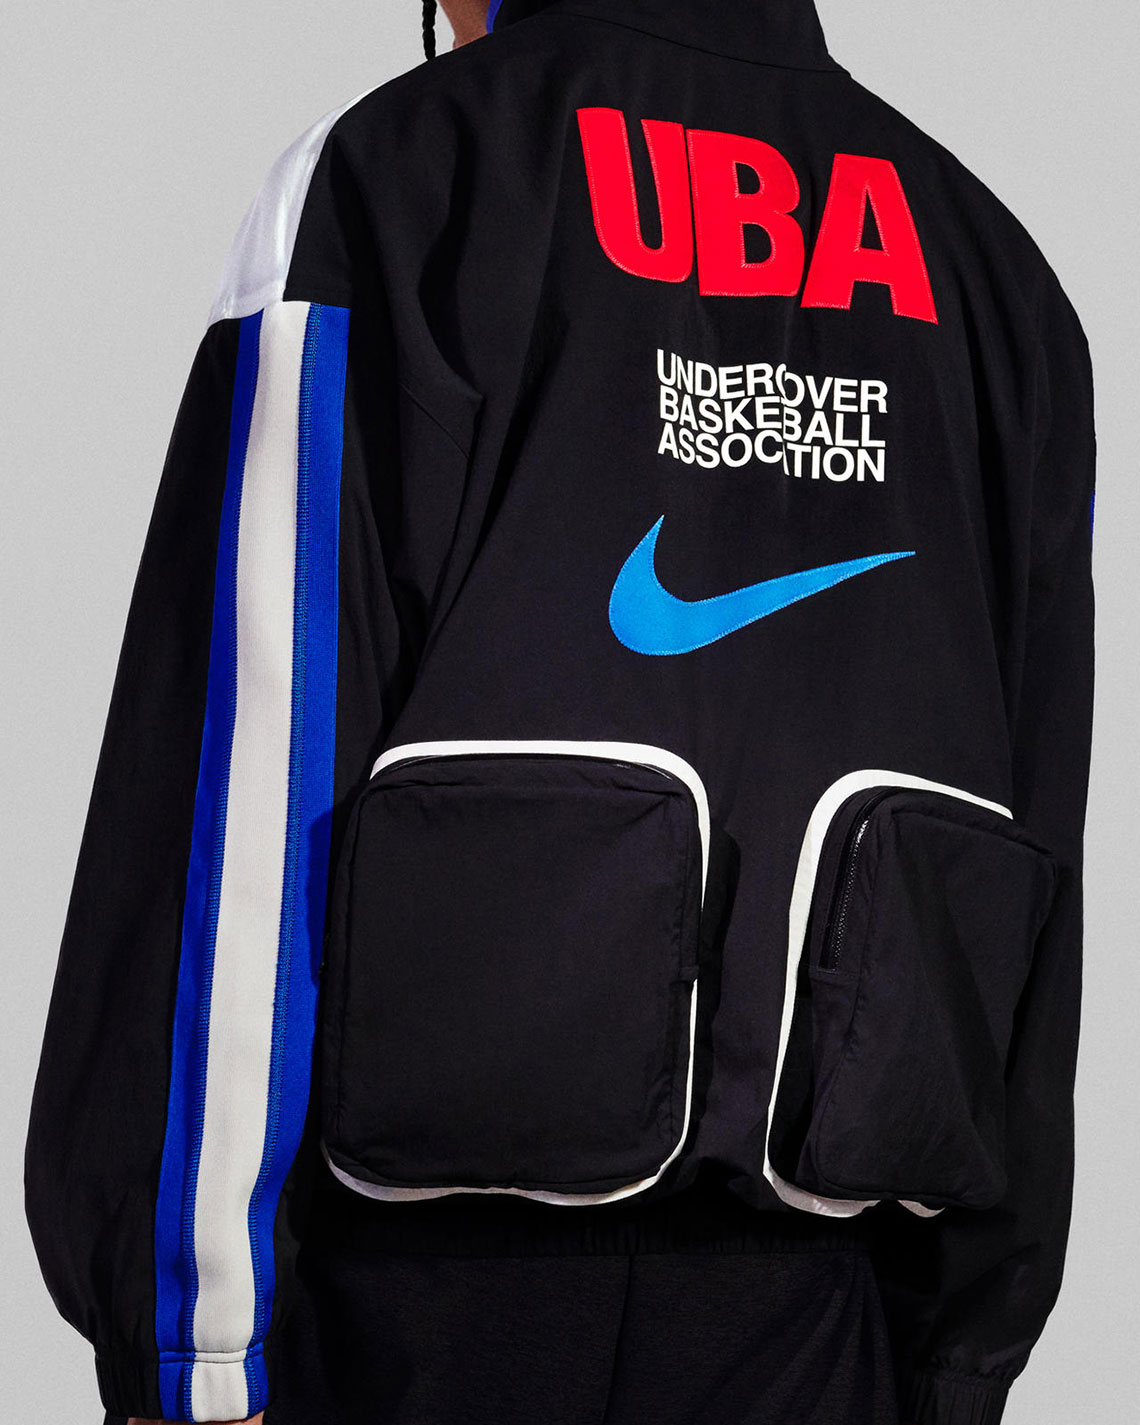 Nike x Undercover Basketball Association - Community